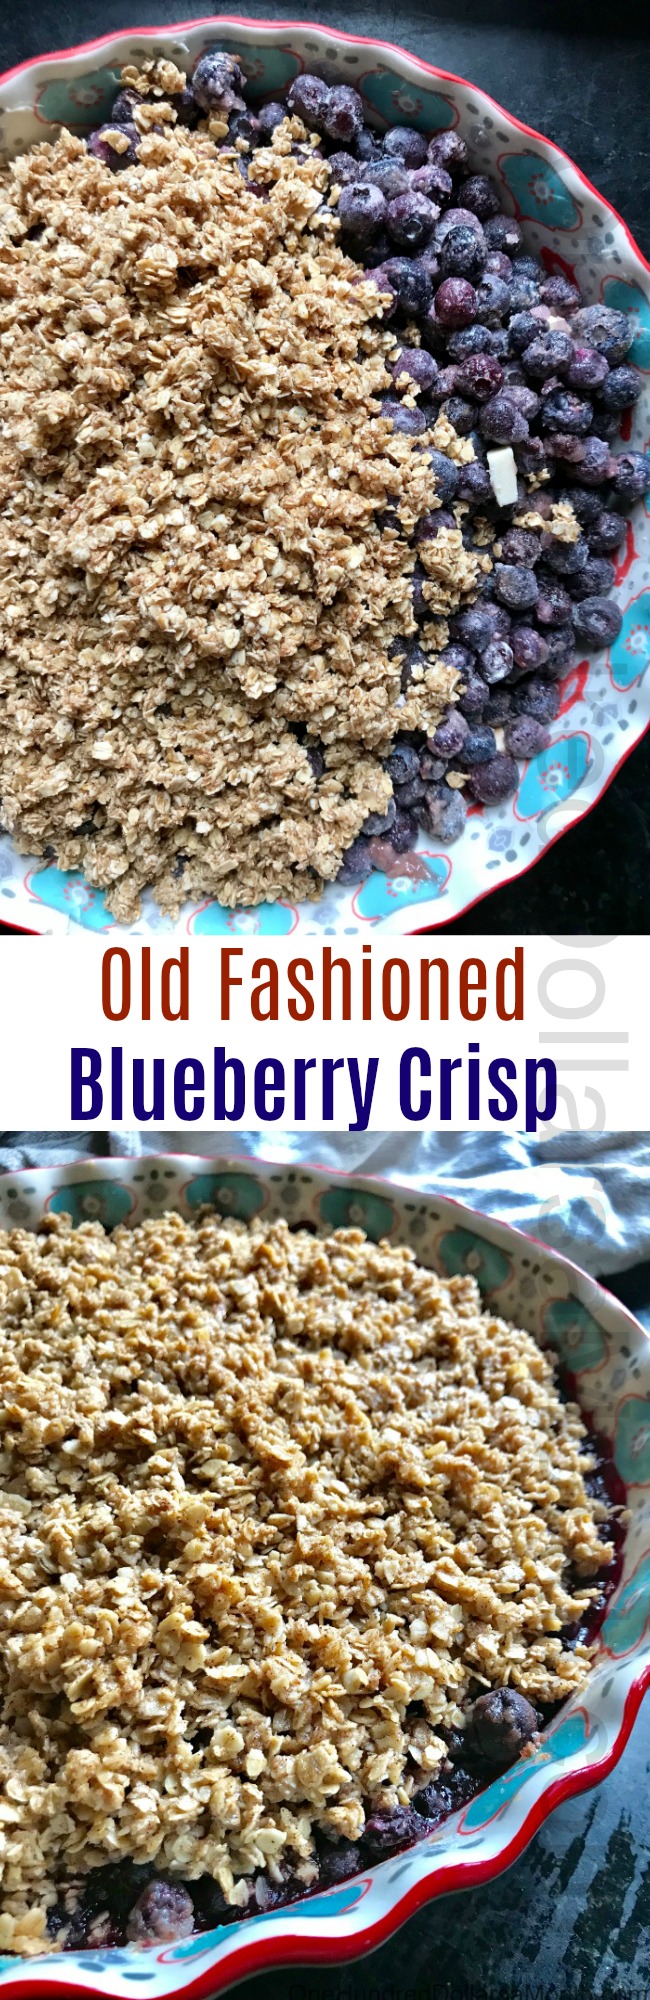 Old Fashioned Blueberry Crisp Recipe